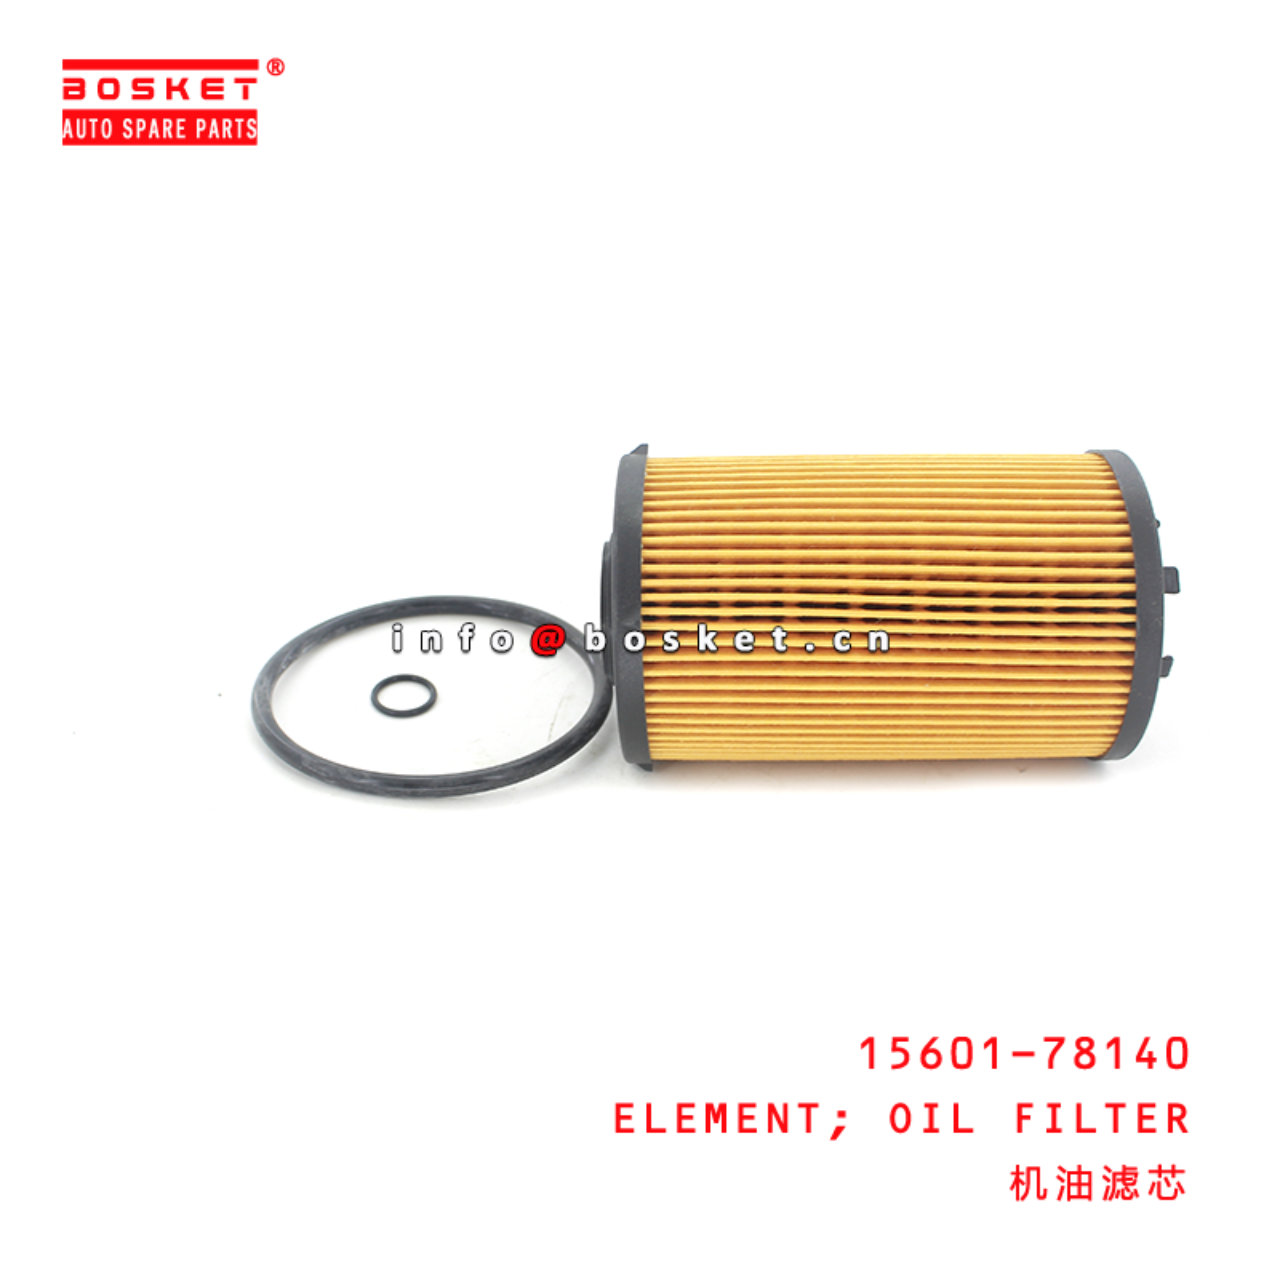 15601-78140 Oil Filter Element Suitable for ISUZU HINO300